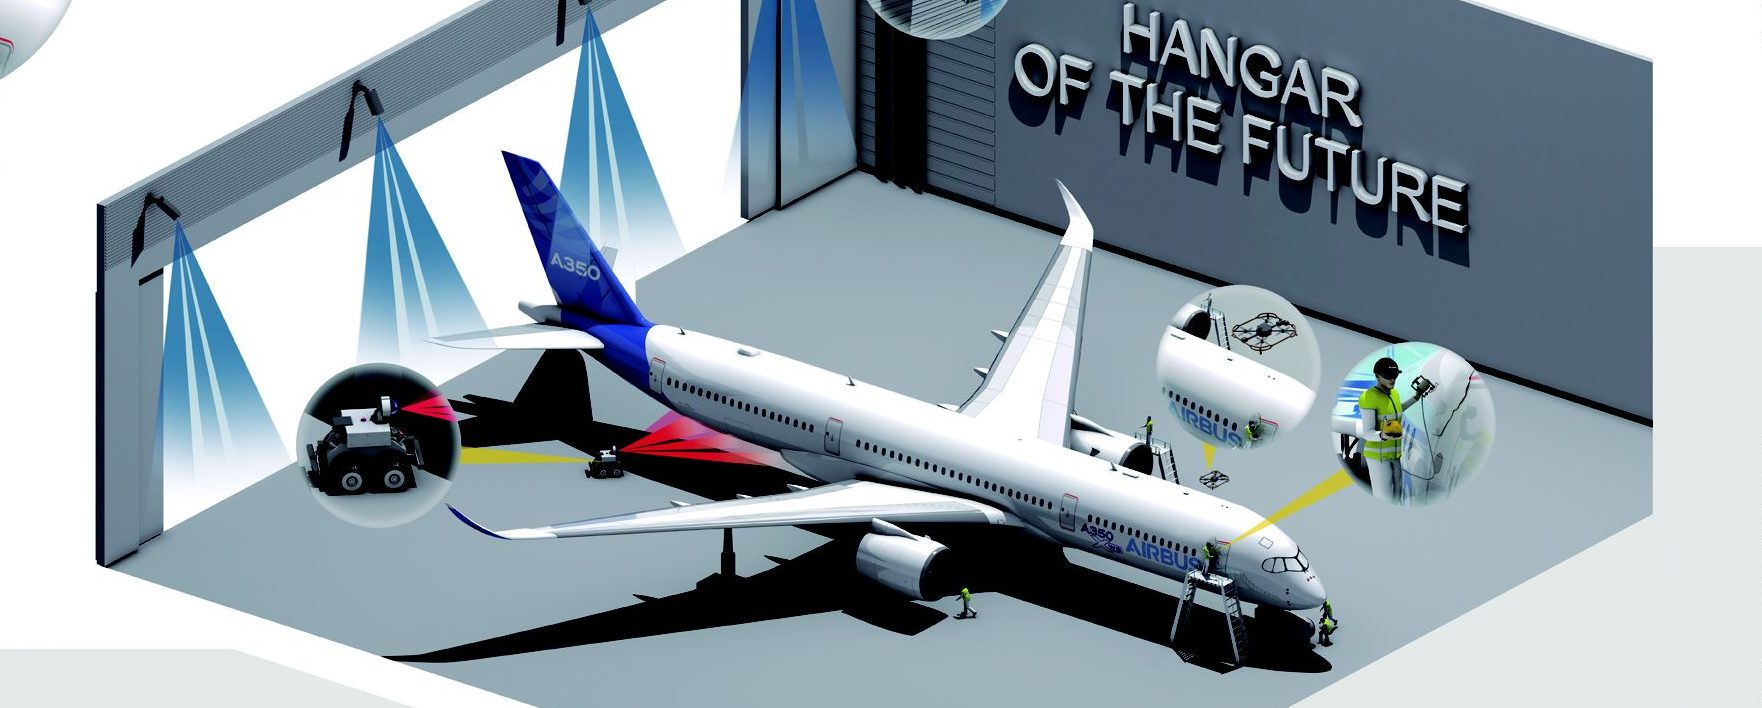 “Hangar of the future” getting closer to enhance aircraft maintenance